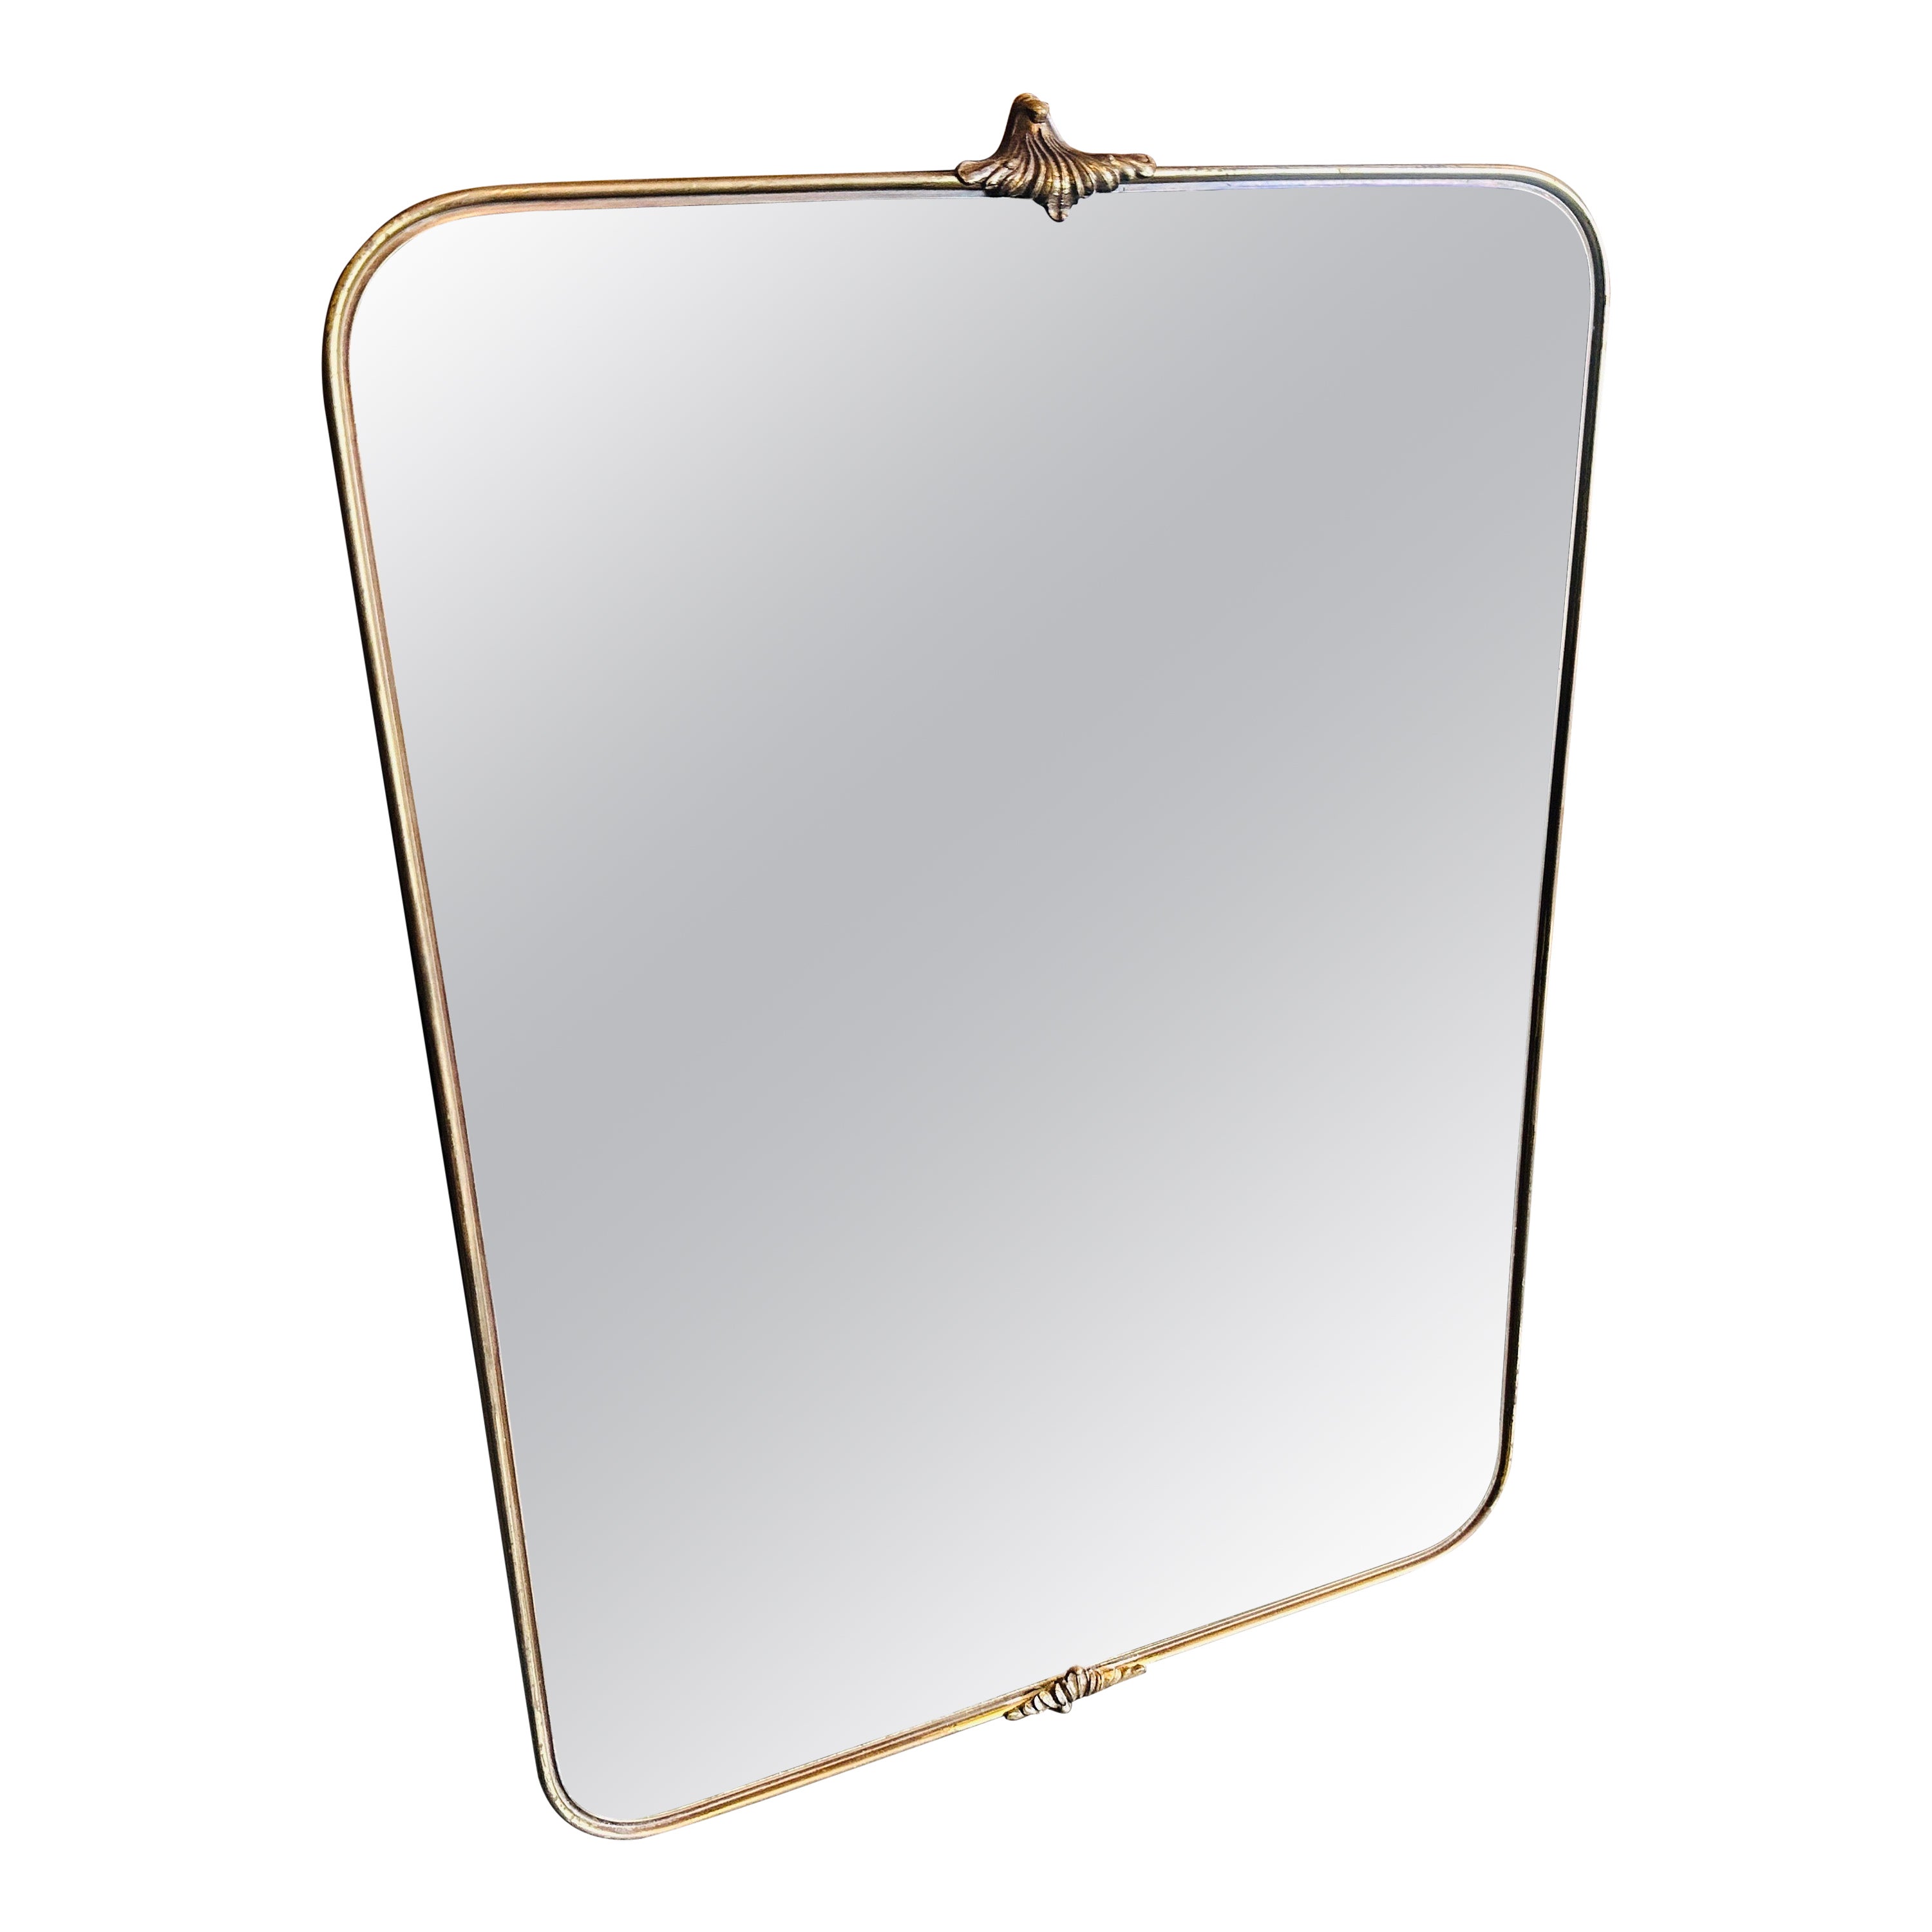 1950s Gio Ponti Style Mid-Century Modern Brass Rectangular Italian Wall Mirror